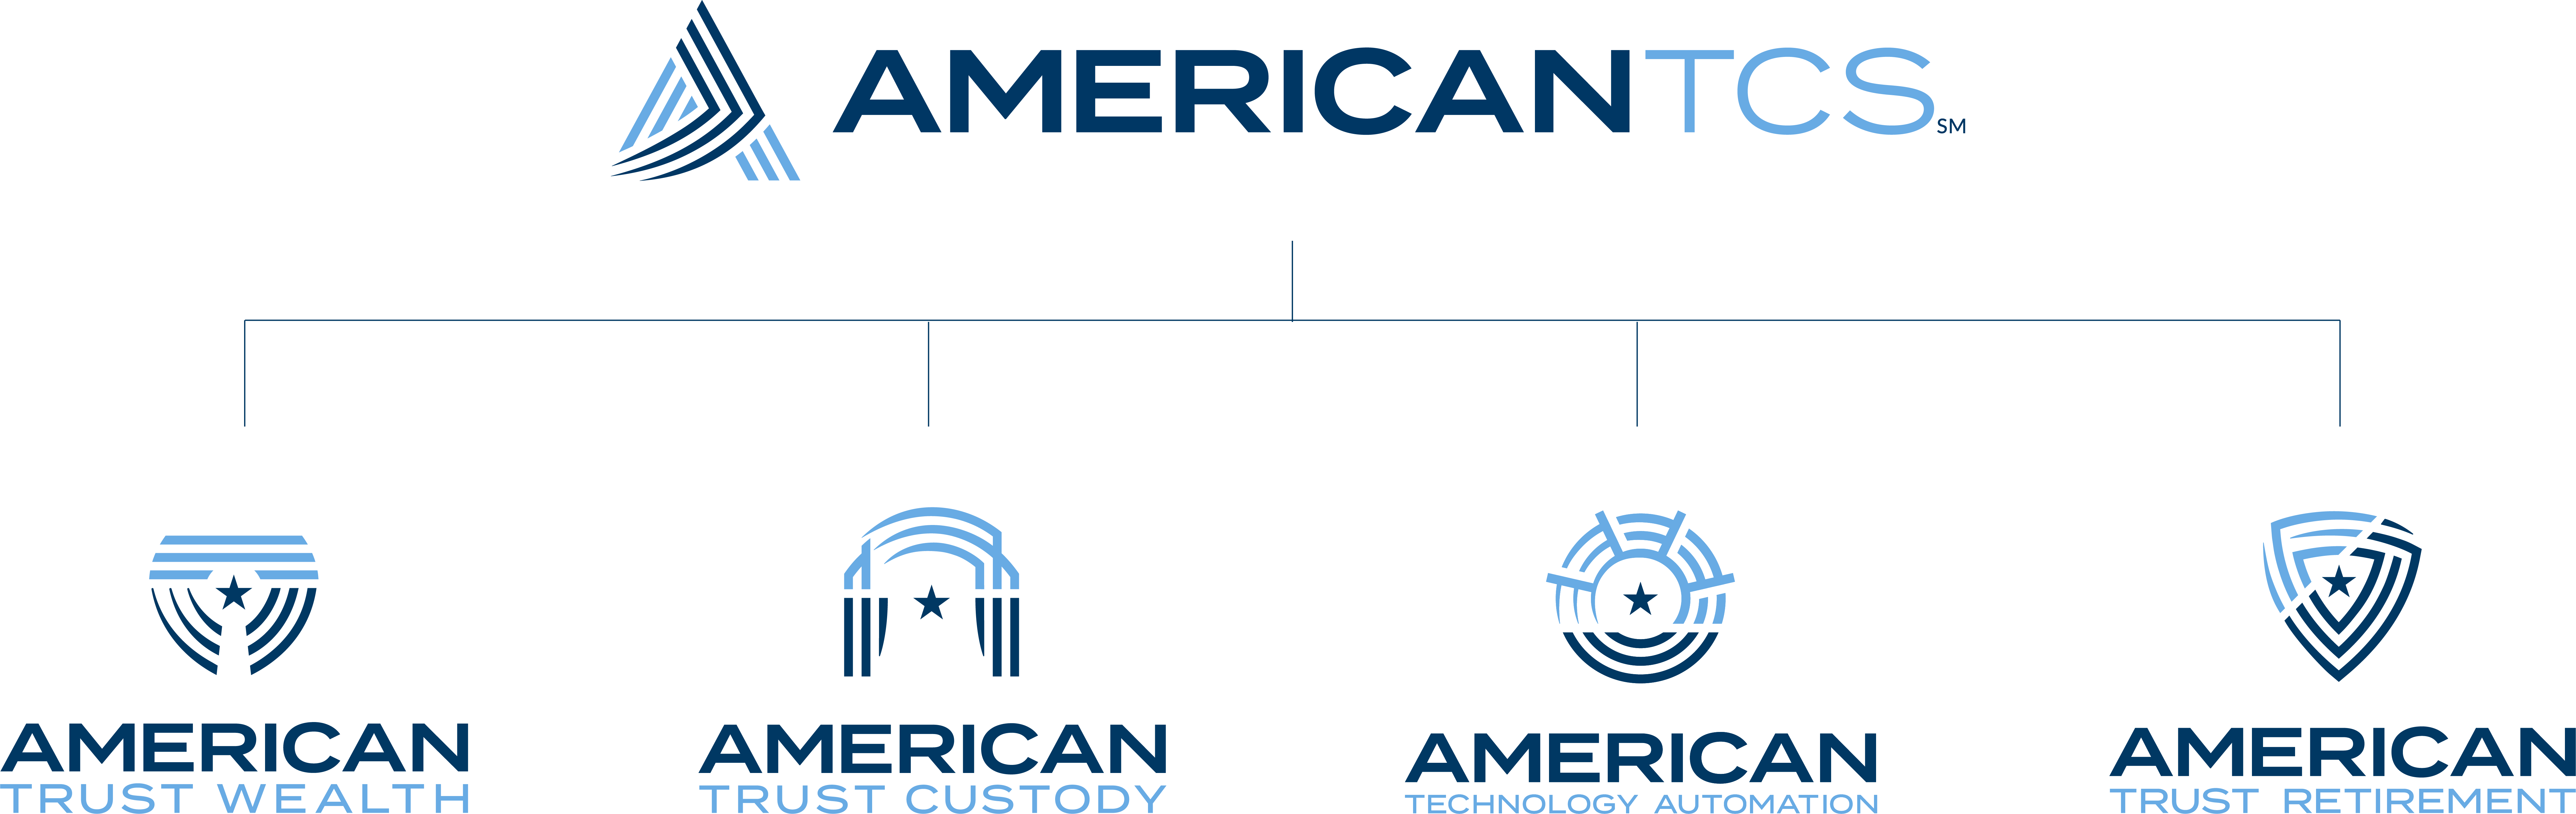 AmericanTCS company organizational chart